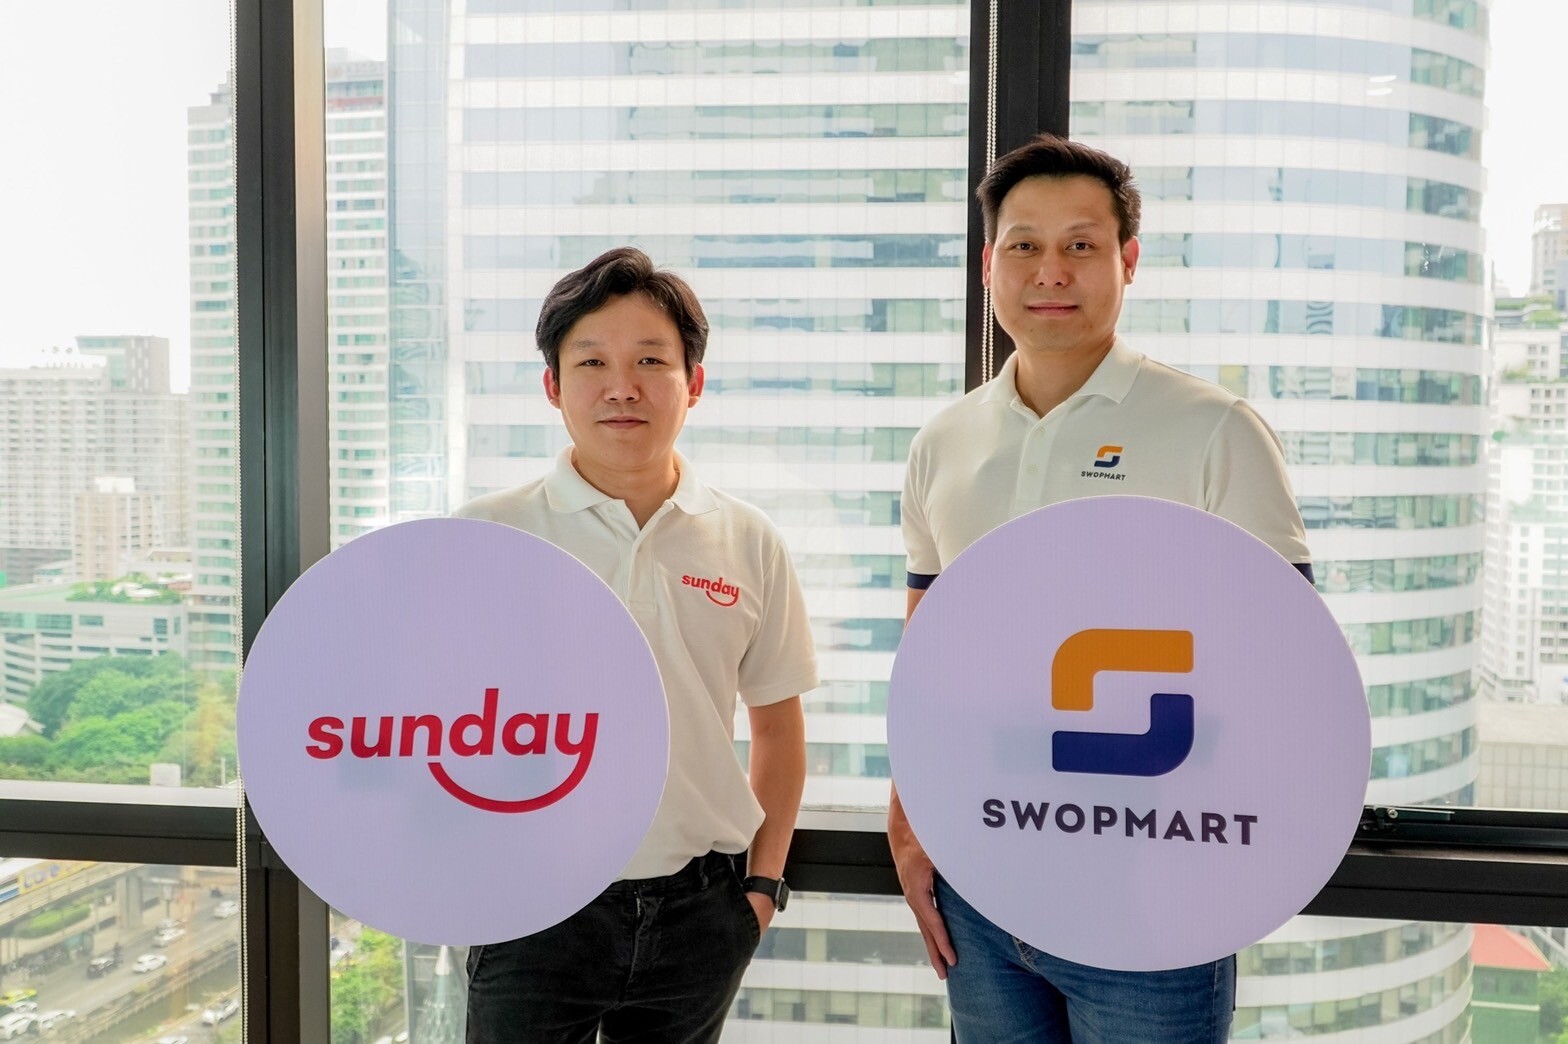 SWOPMART โดย Synnex และ SCB 10X ร่วมมือกับ Sunday ให้บริการดูแลอุปกรณ์อิเล็กทรอนิกส์ มือสองแบบเต็มรูปแบบครั้งแรกในประเทศไทย